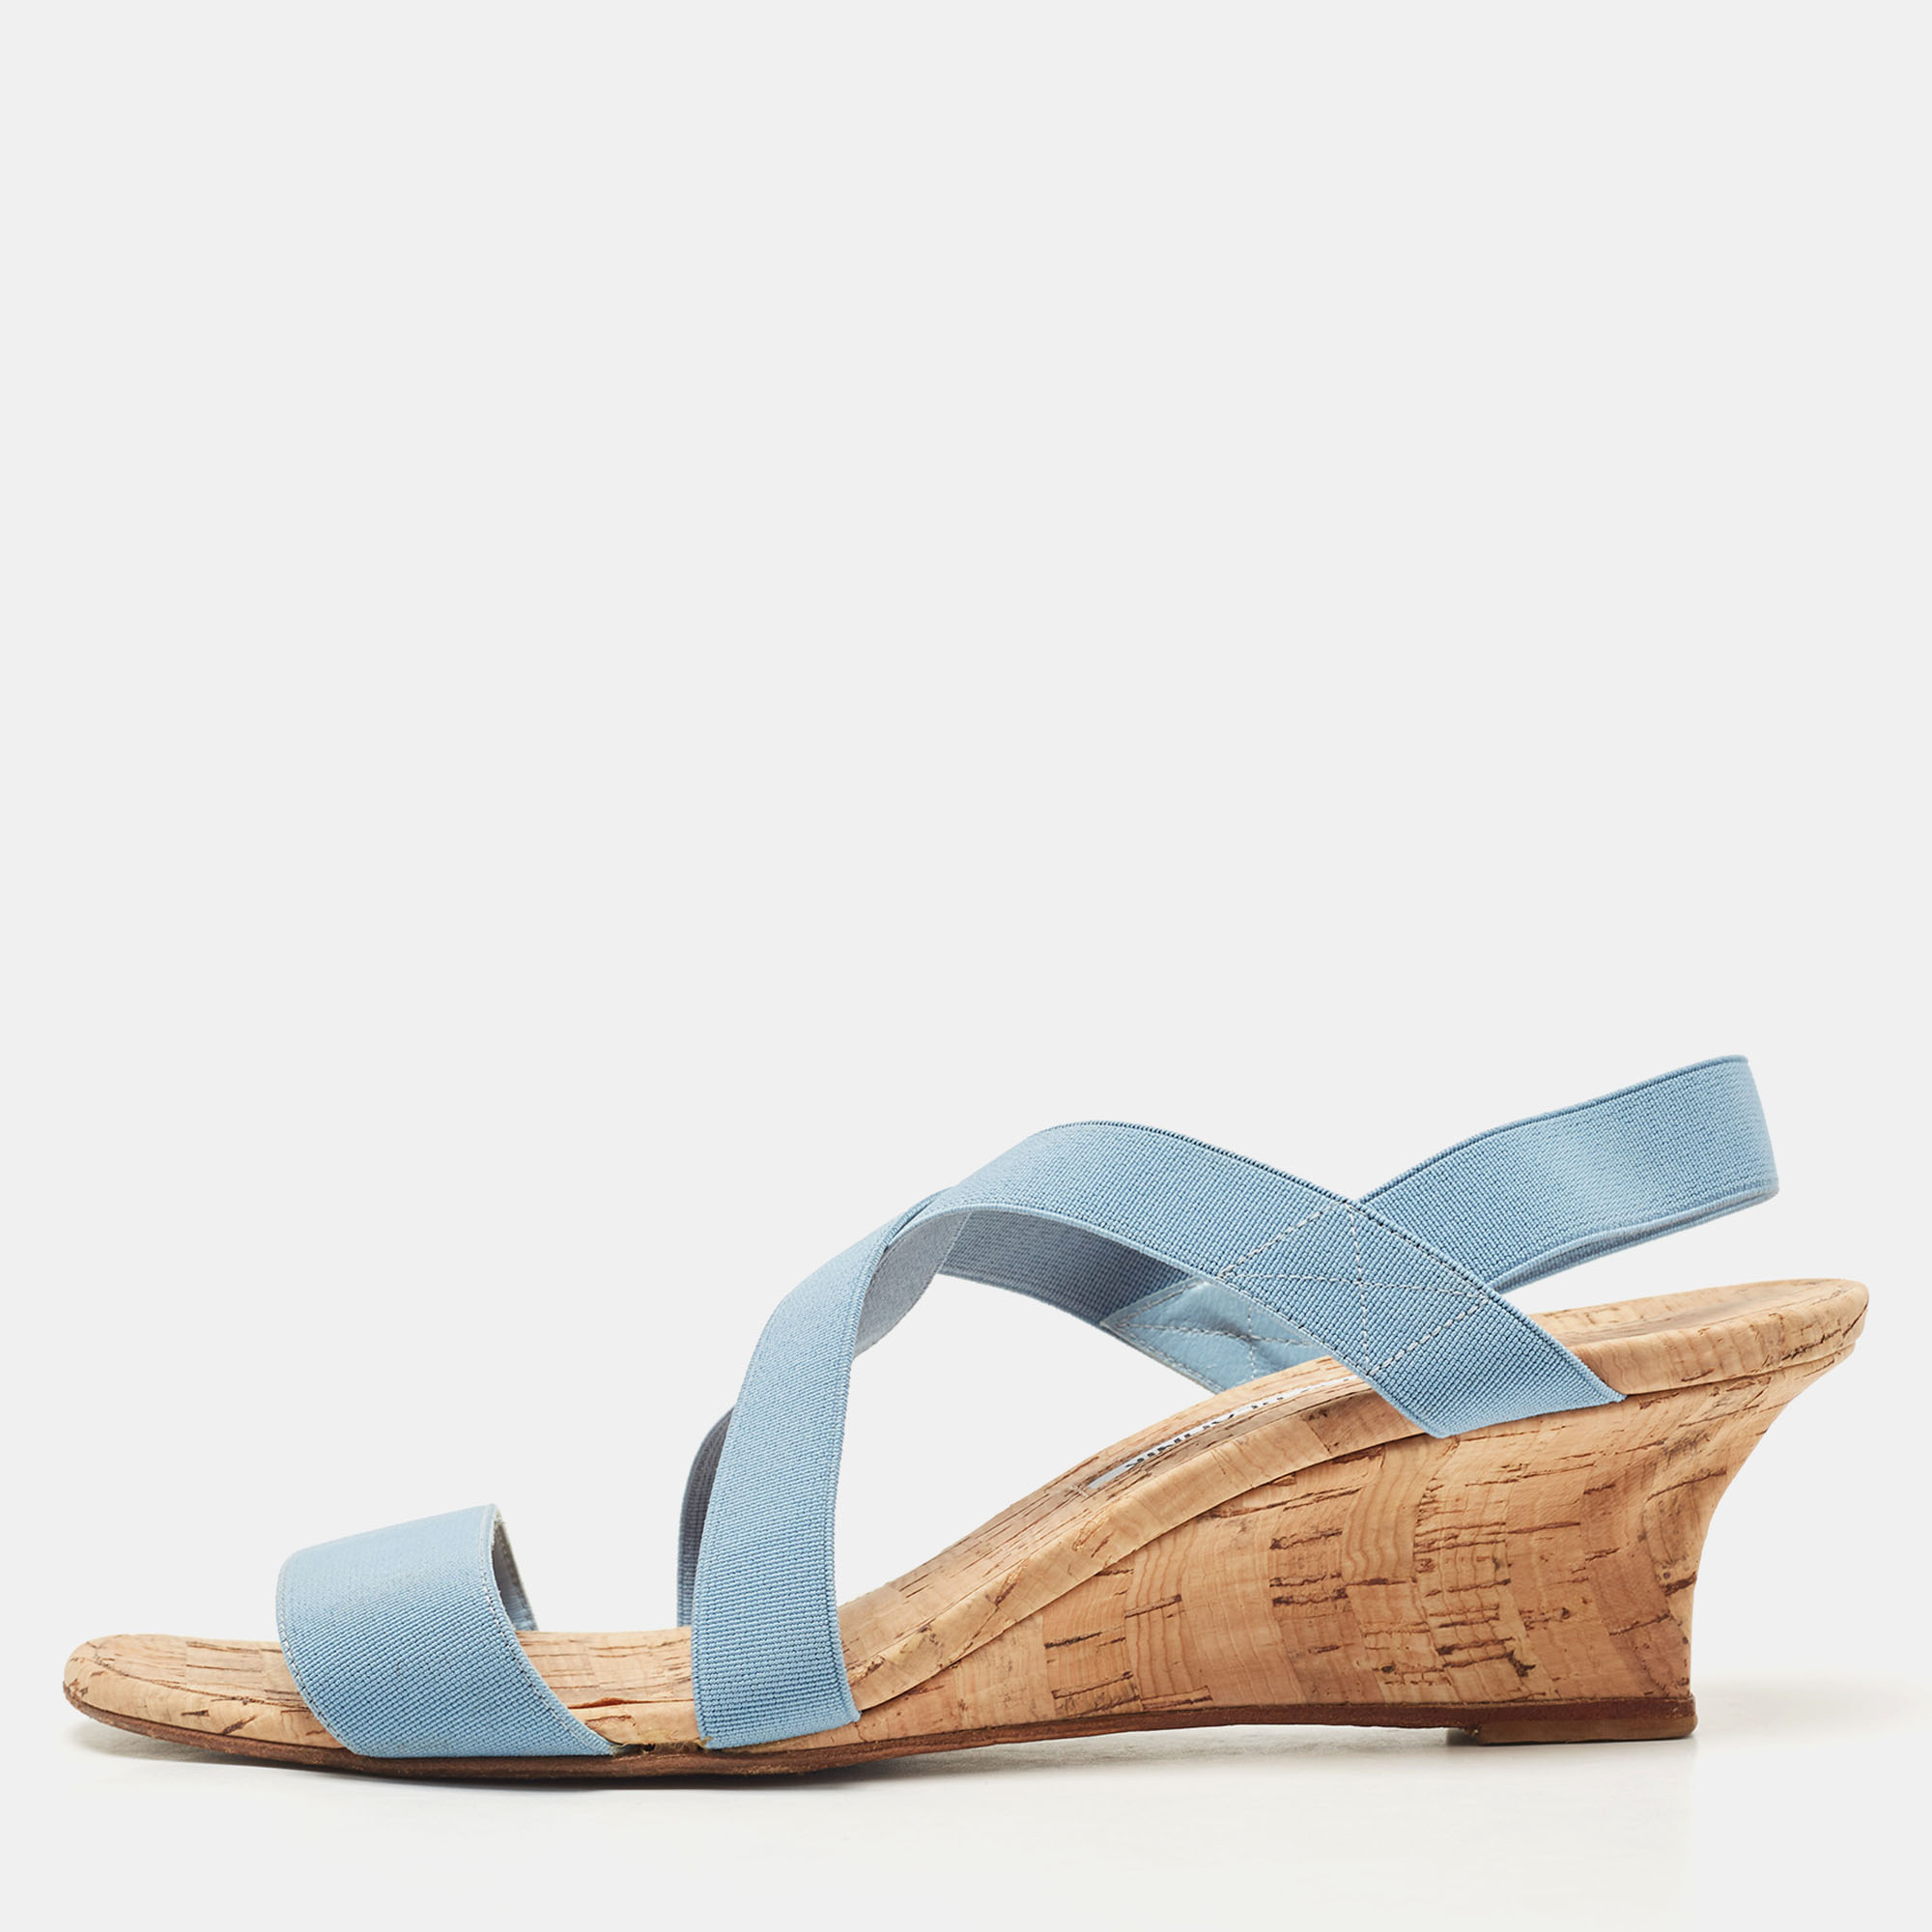 Manolo blahnik blue stretch fabric terwe cork wedge ankle strap sandals size 40